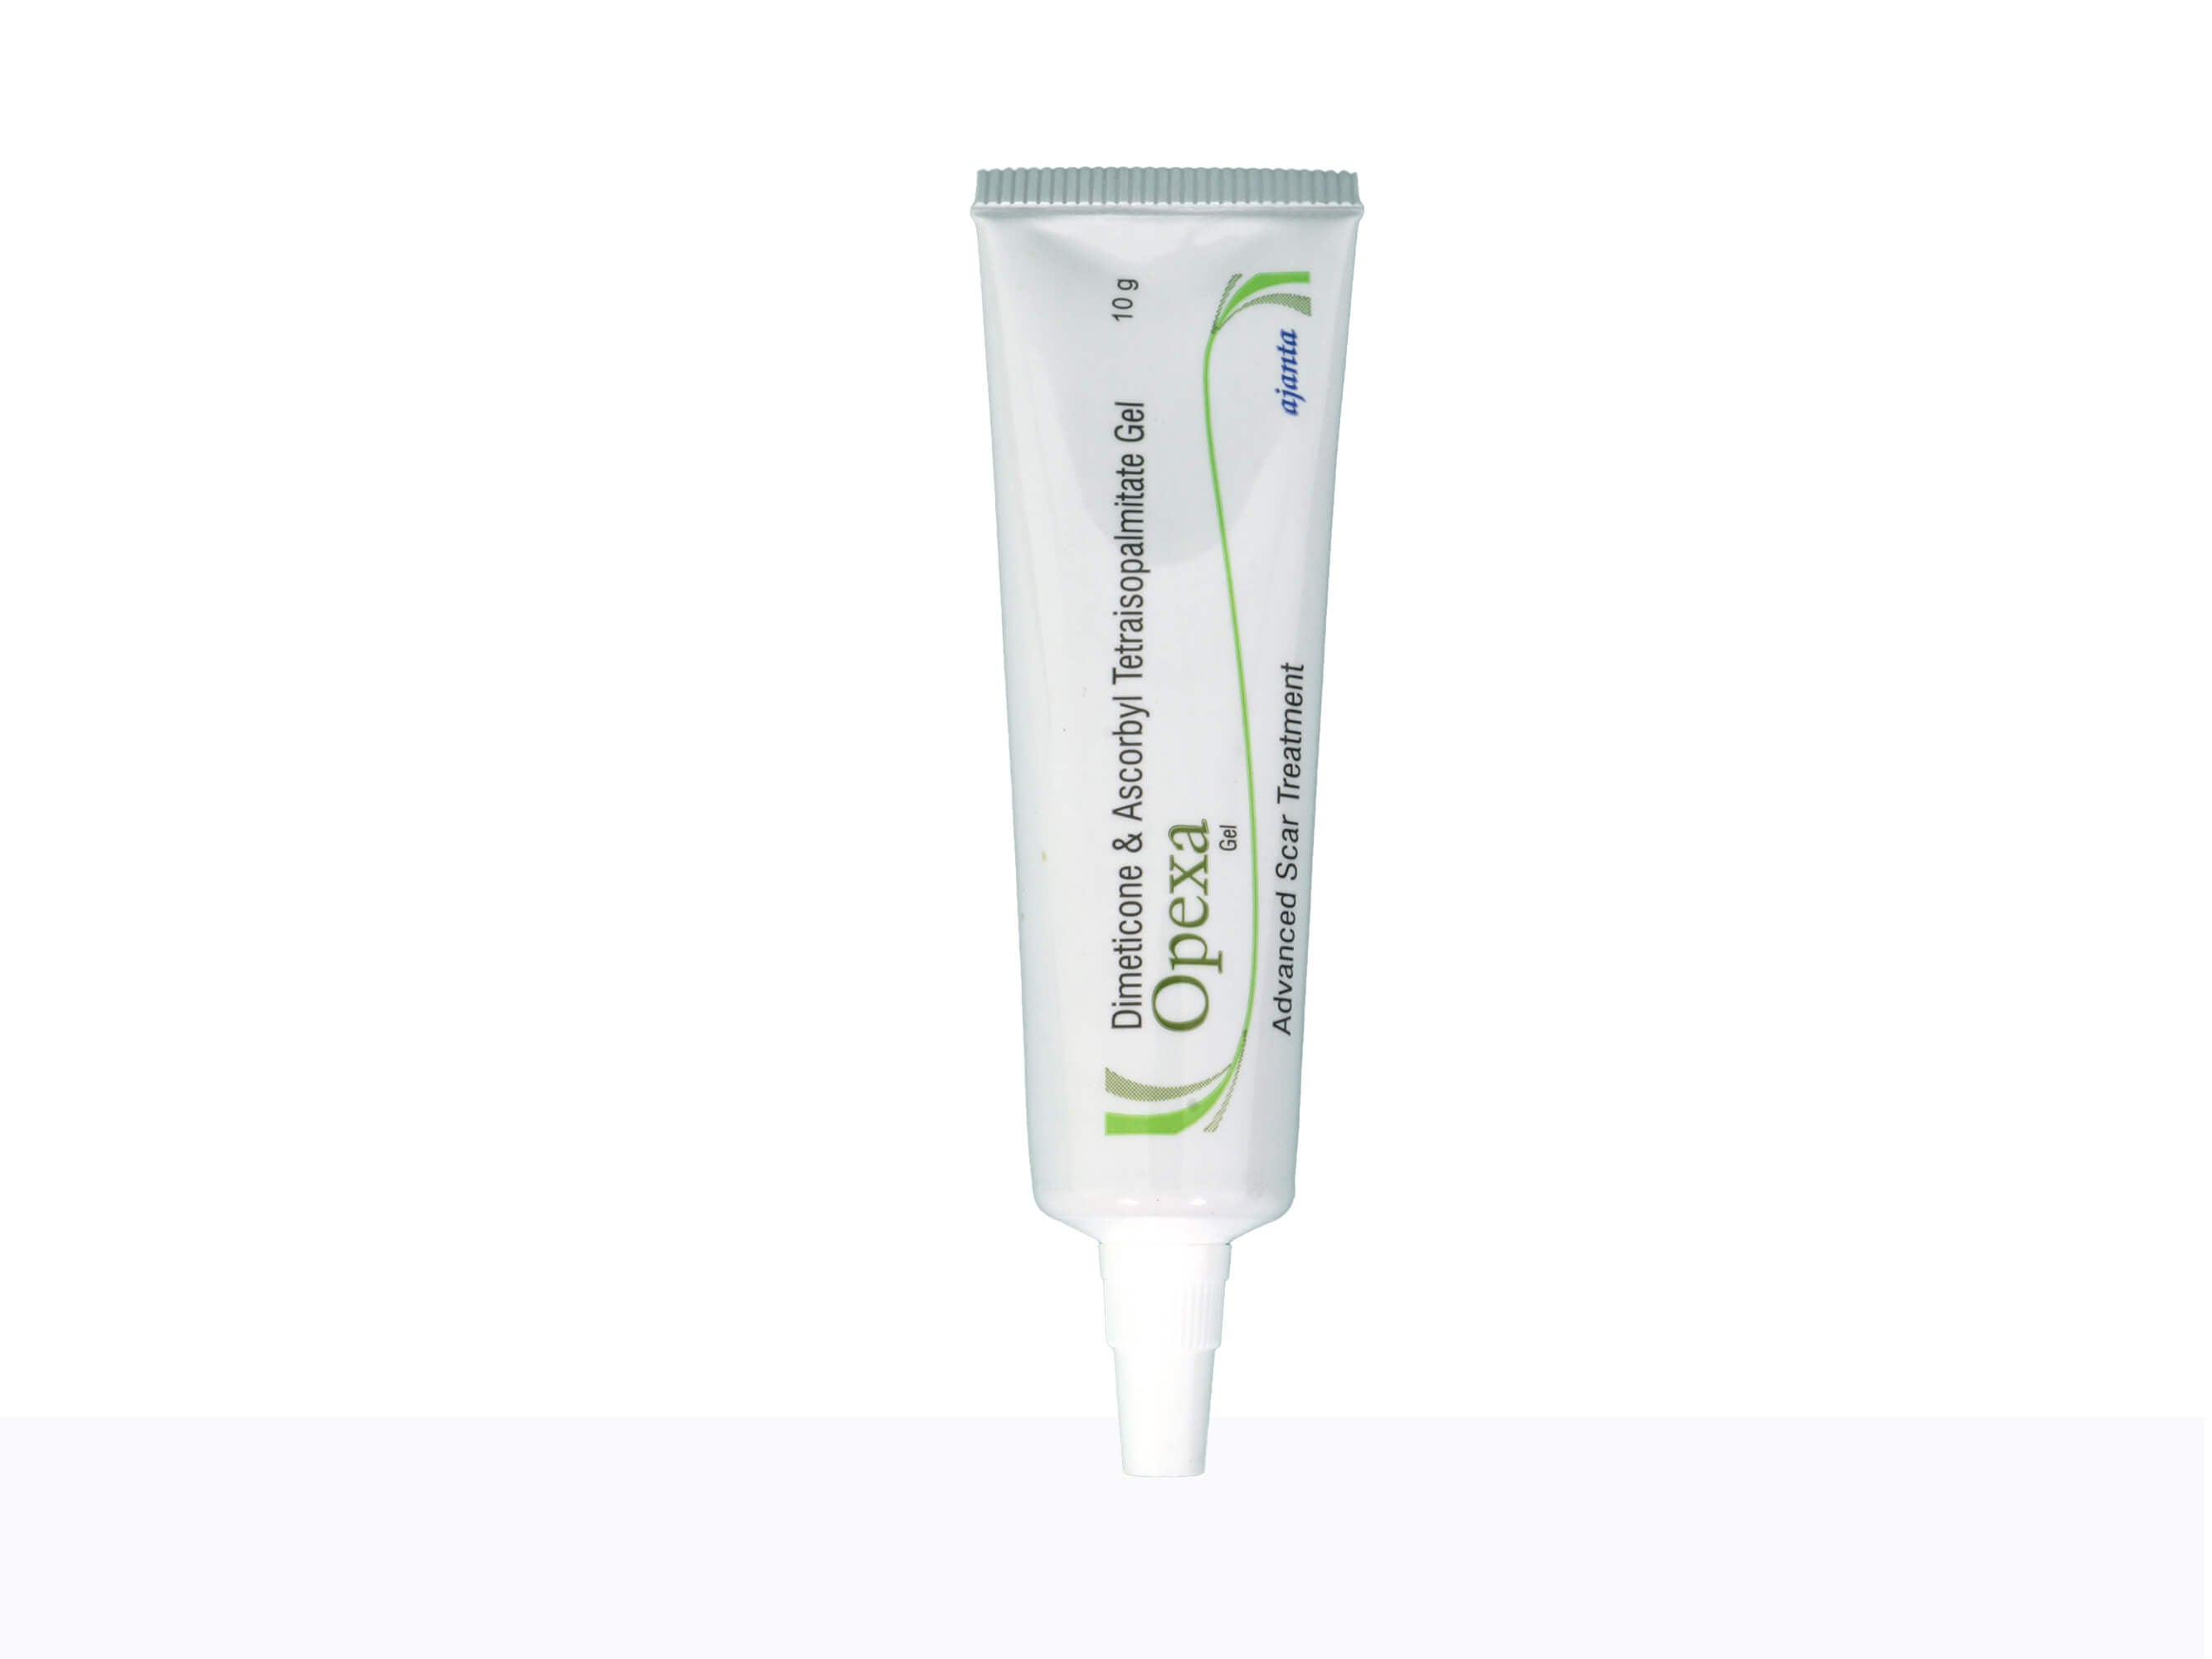 Opexa gel (Advance scar treatment) - Clinikally